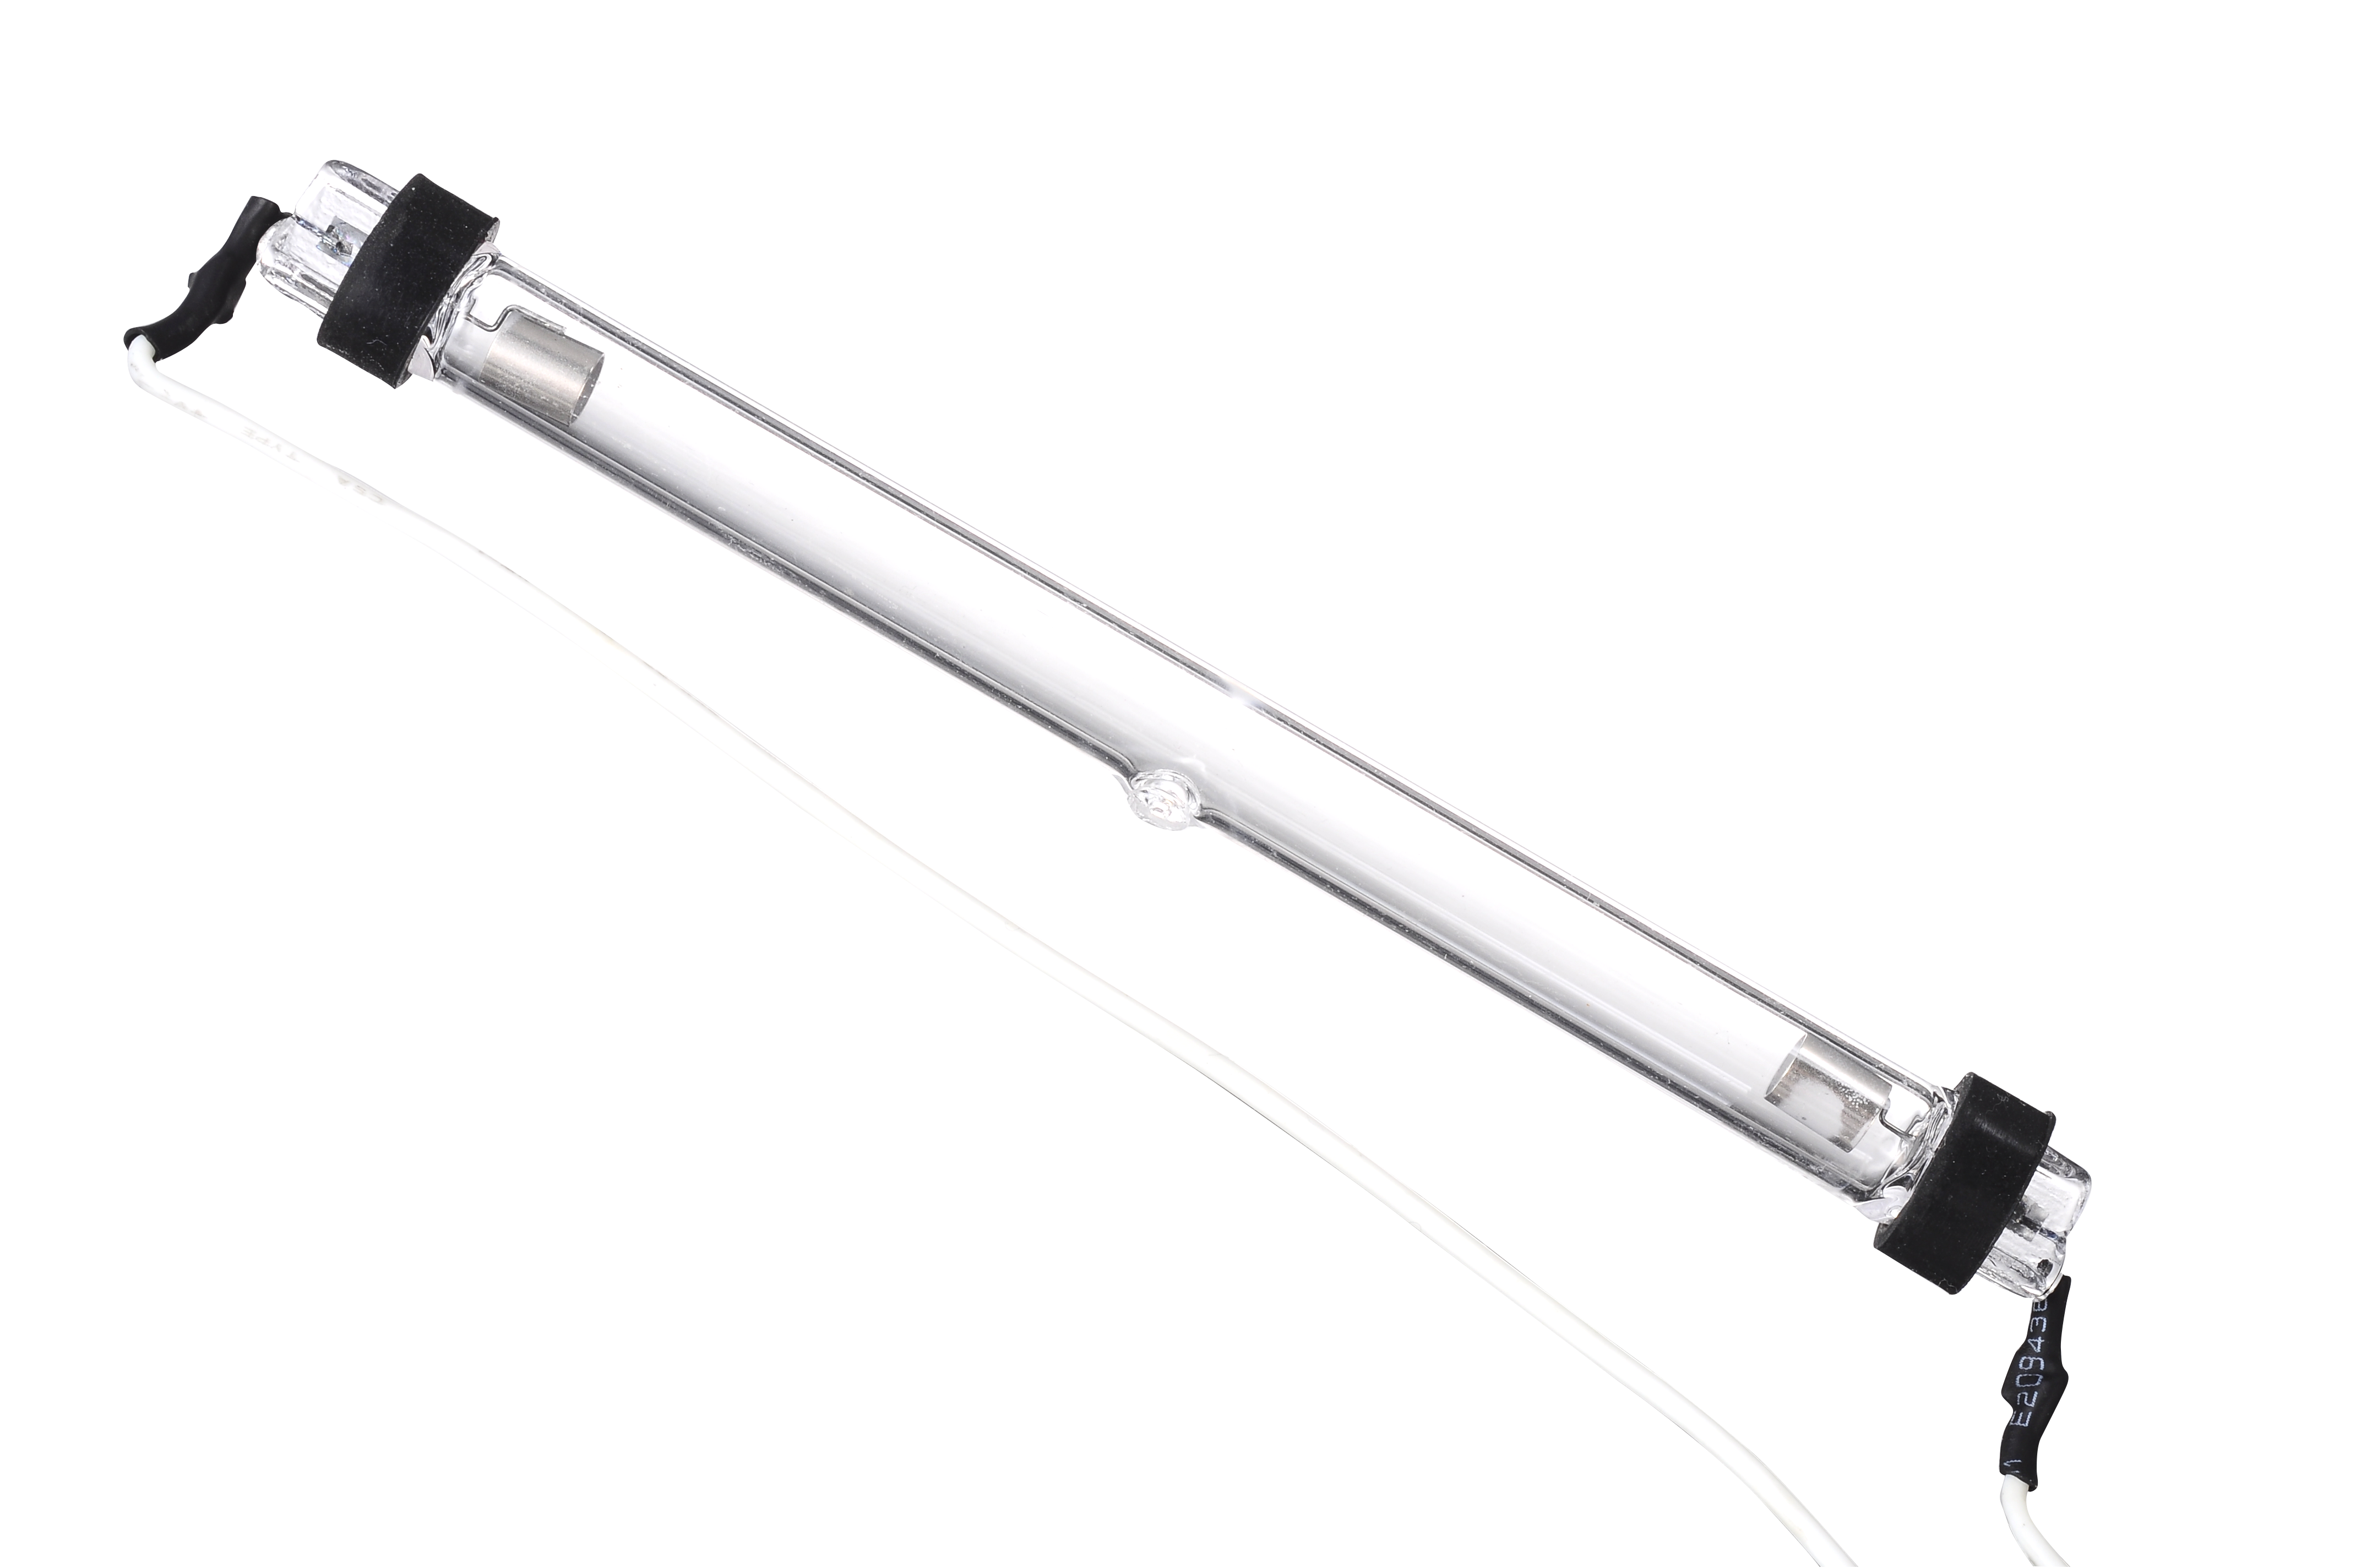 cold cathode 1~2W straight-tube germicidal UV light